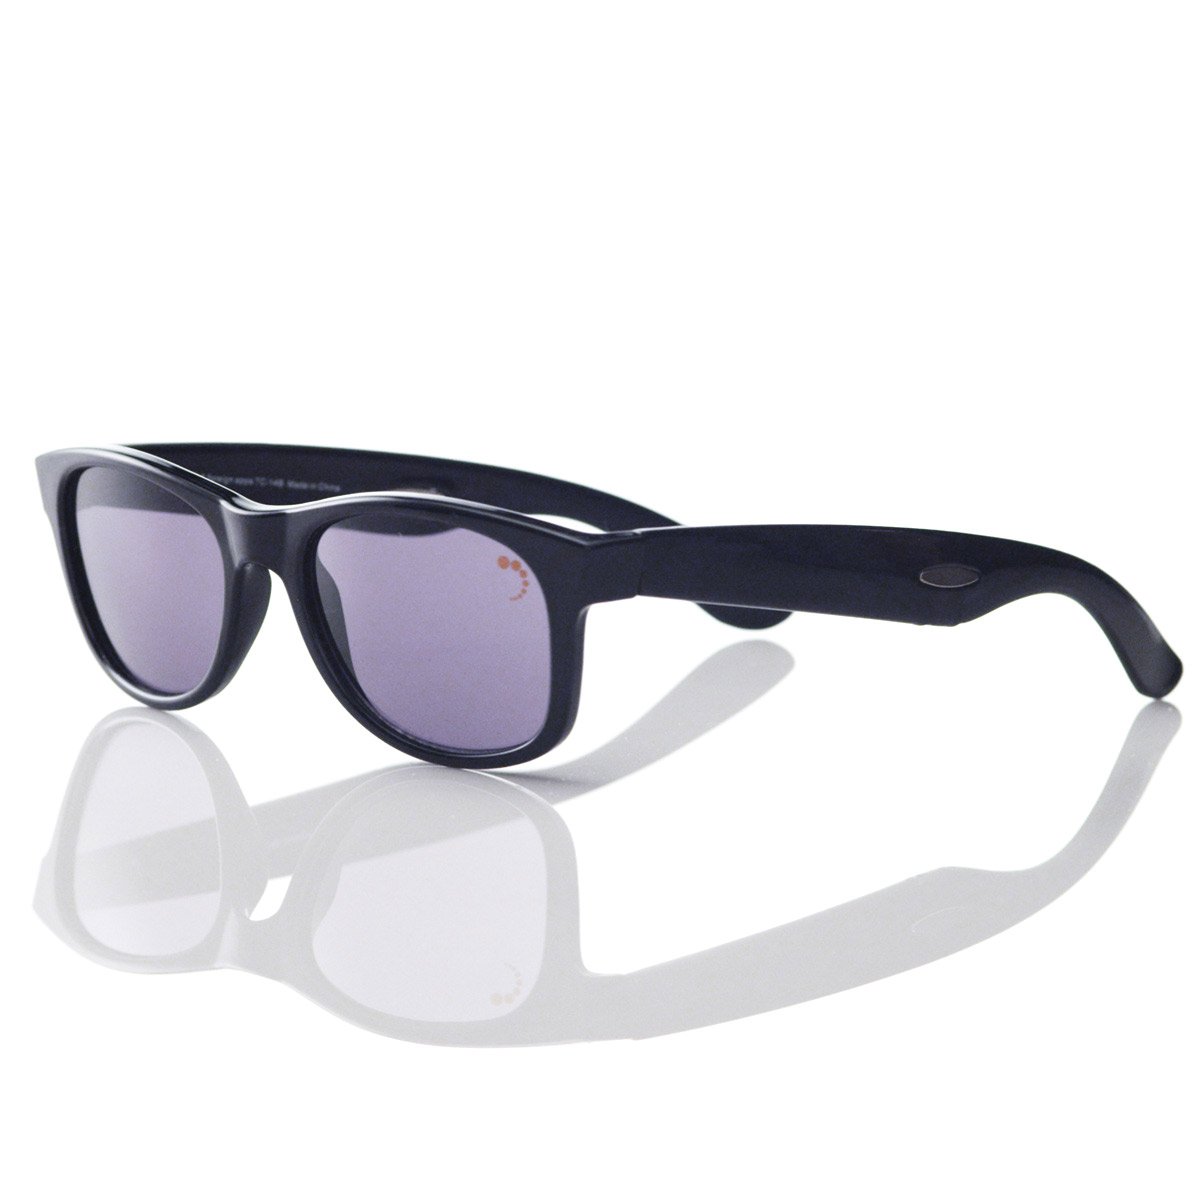 Lentes Trucolor Sunglasses Kit Black Mejor Compra Tv